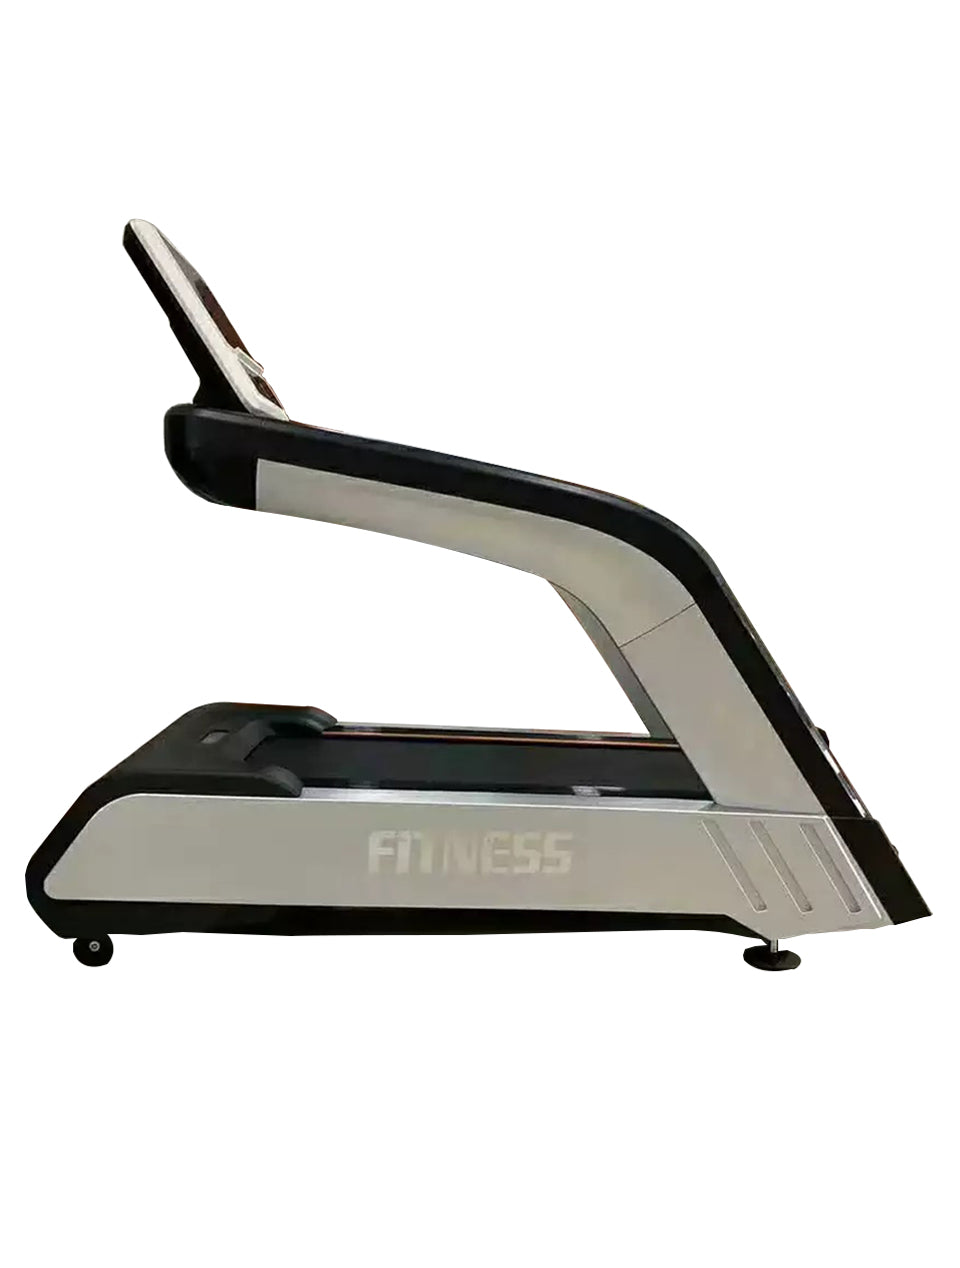 1441 Fitness 3HP AC LED Commercial Treadmill - 41FGL800